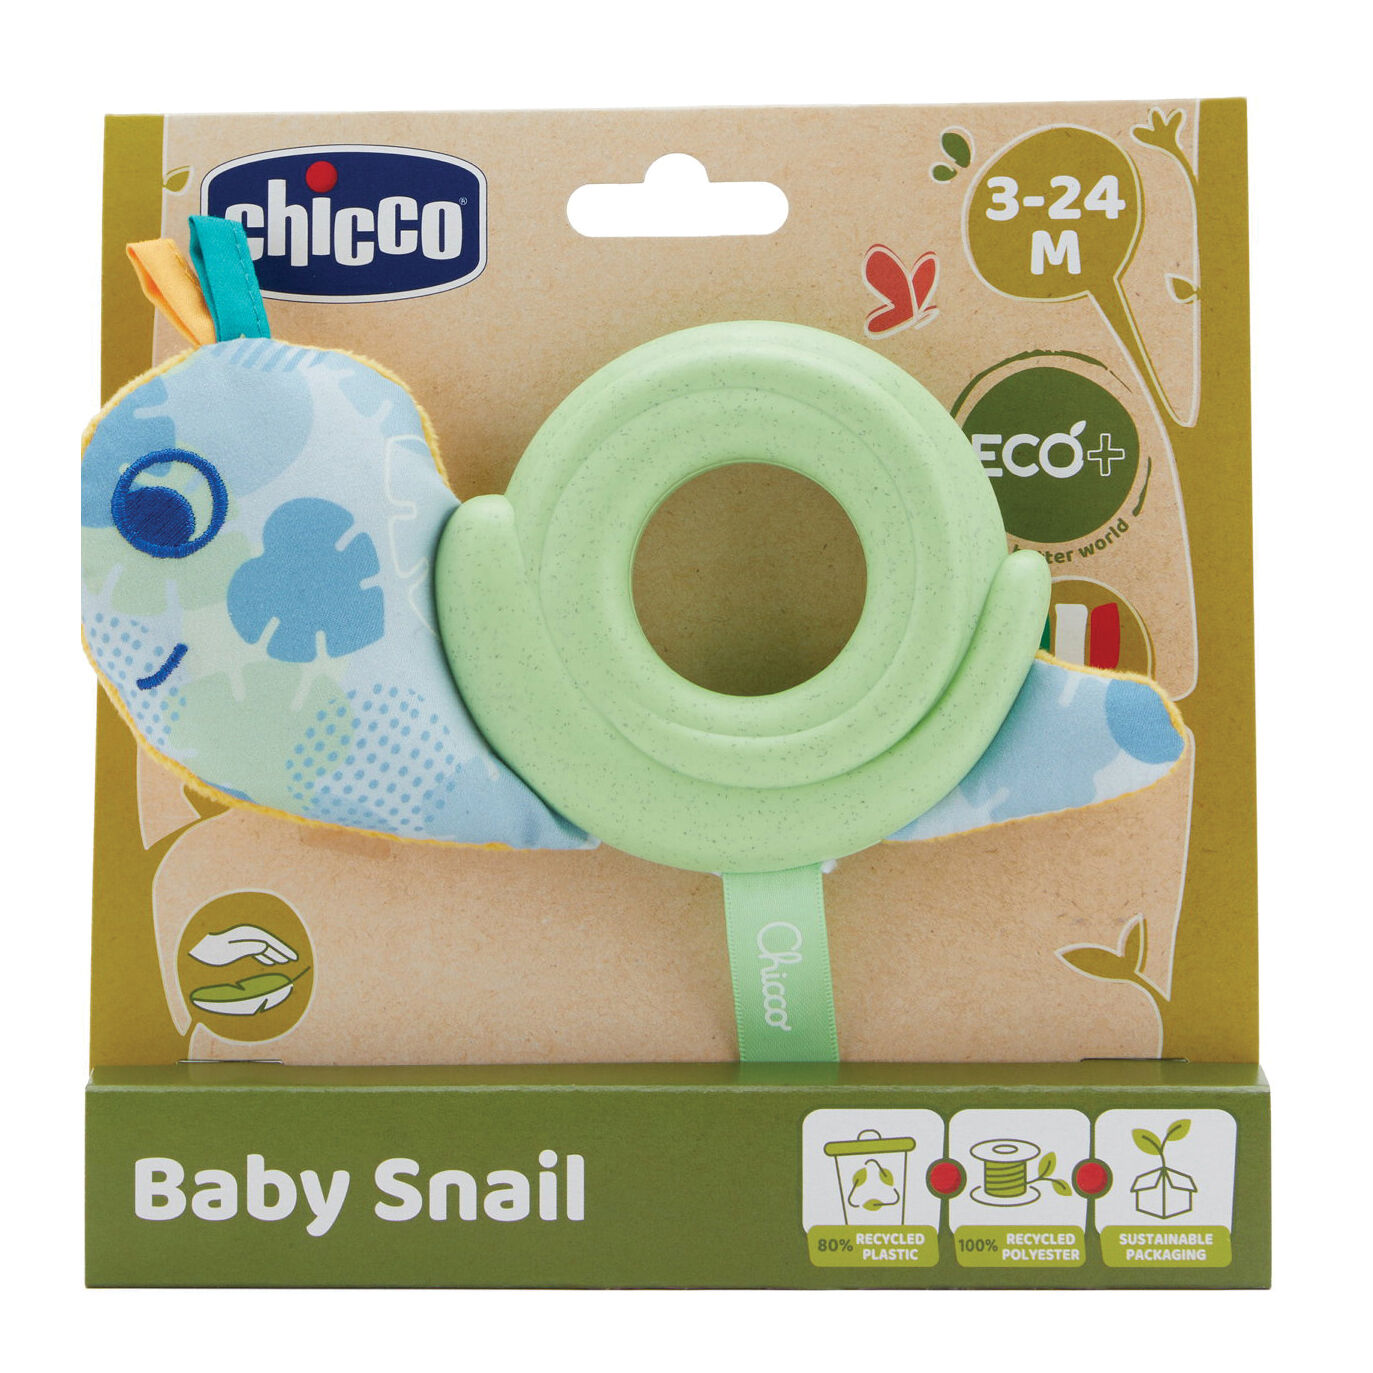 Chicco gioco baby snail eco+